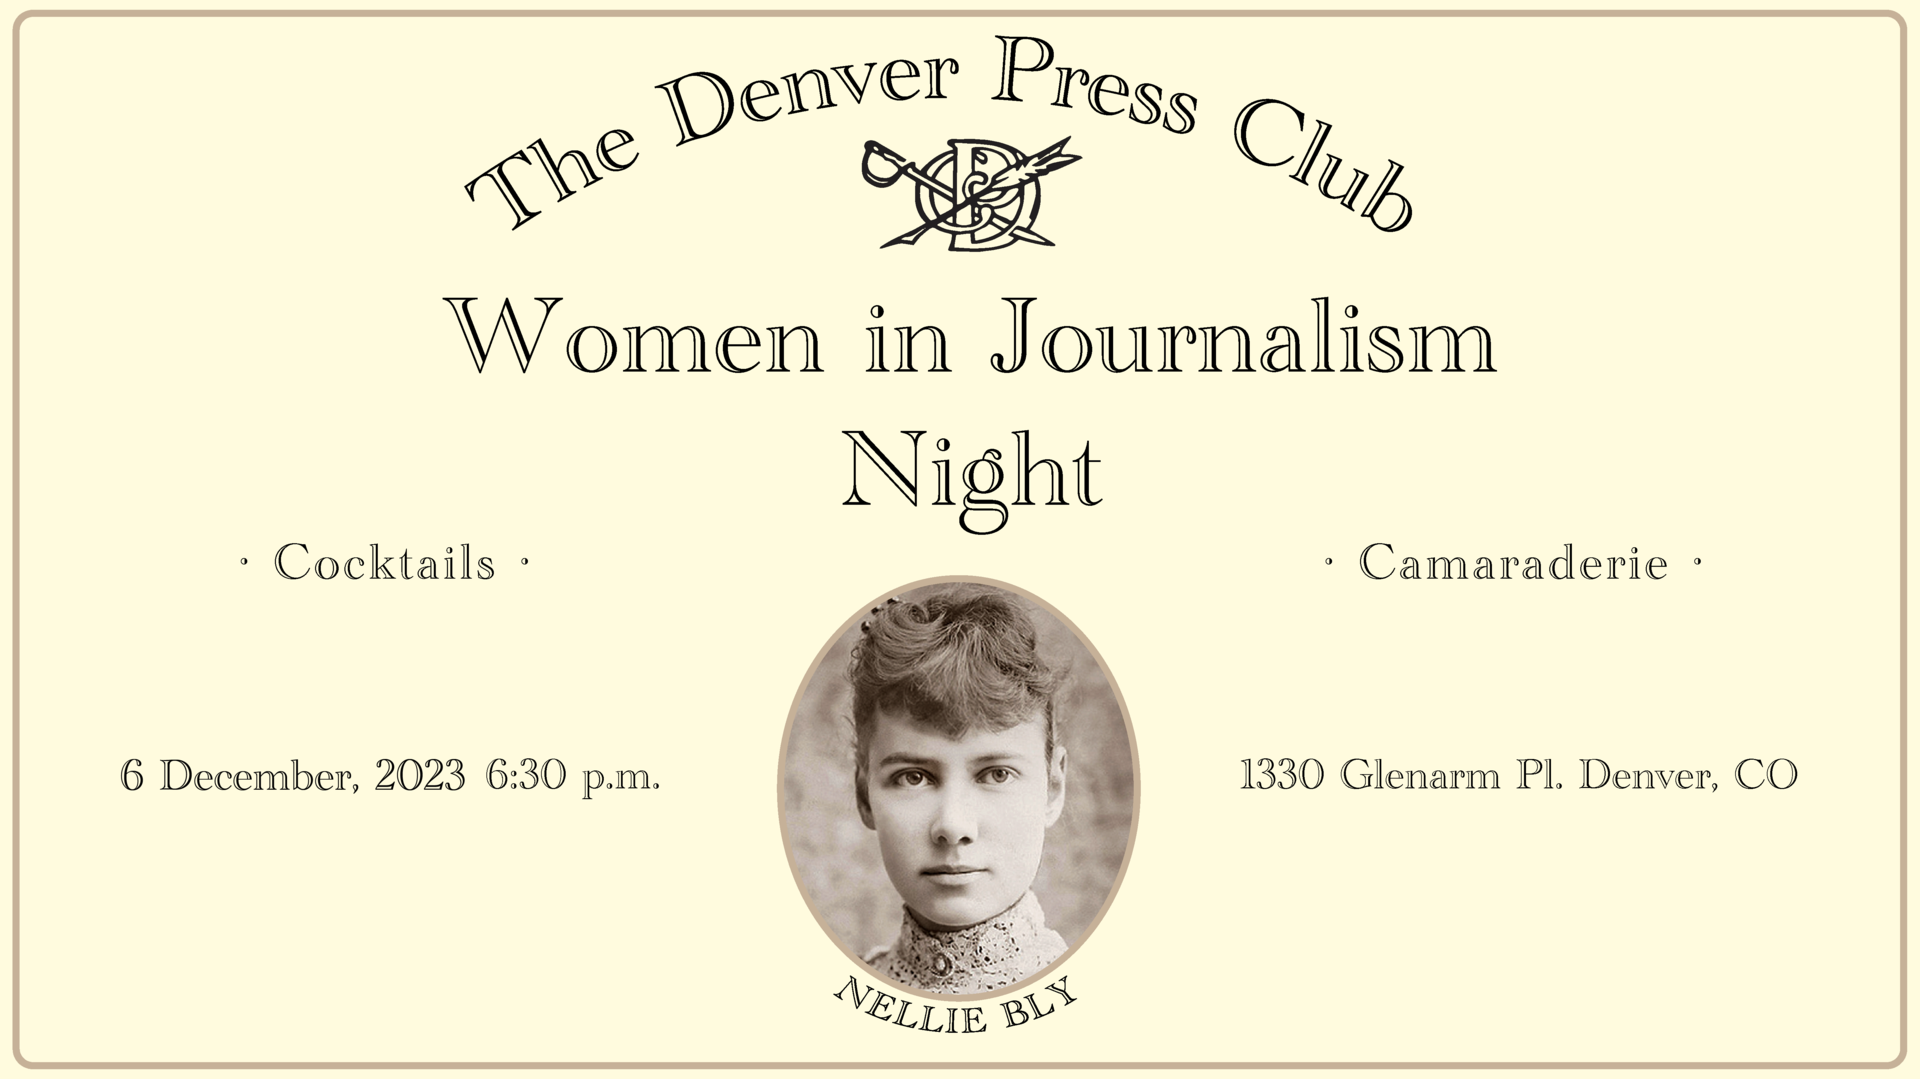  The Denver Press Club presents Women in Journalism Night